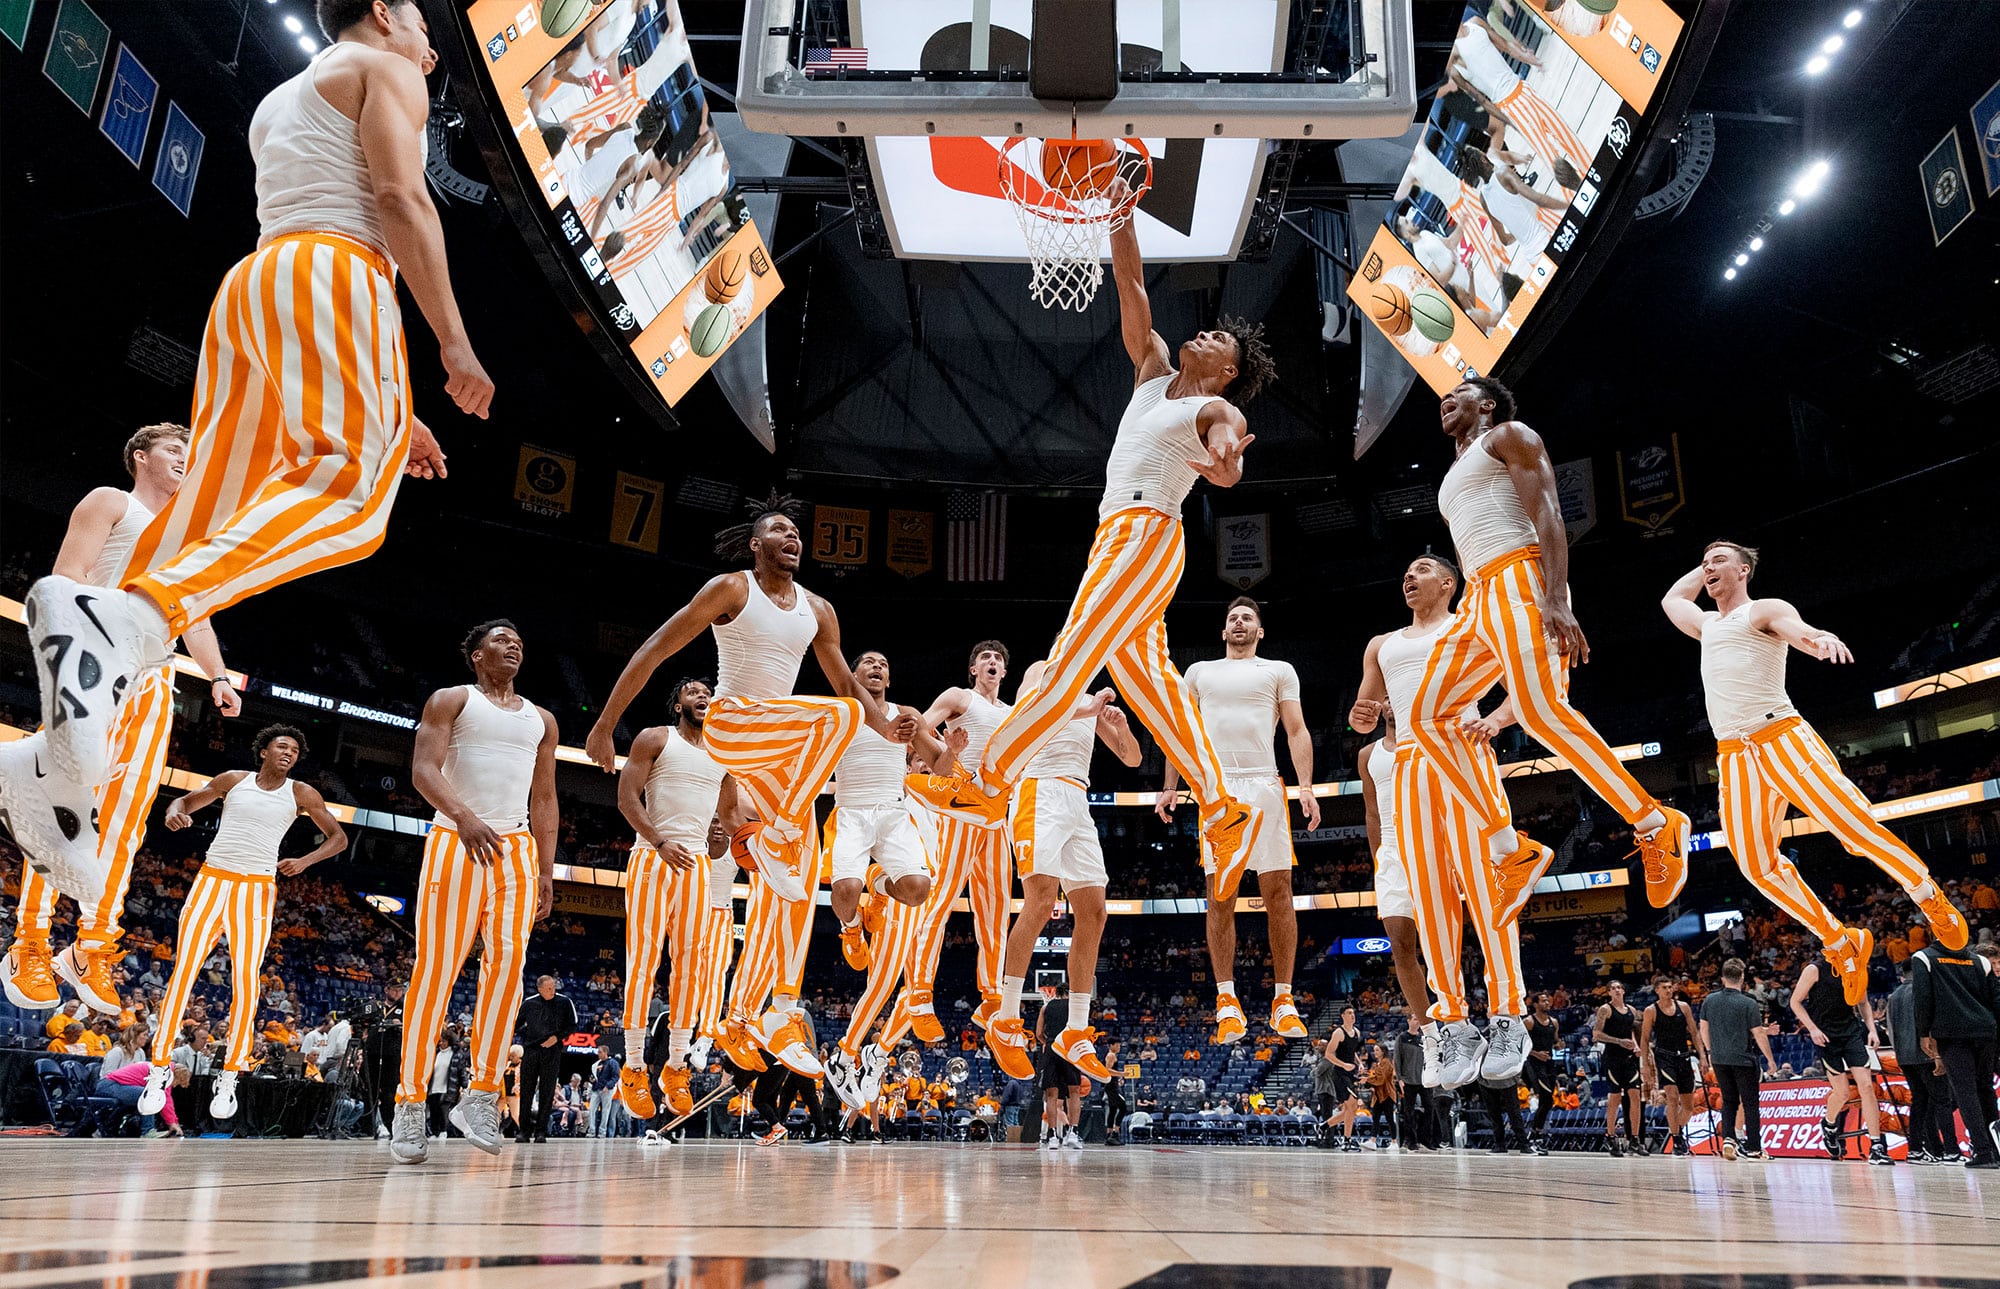 The men's basketball team jumps as one team member makes a slam dunk